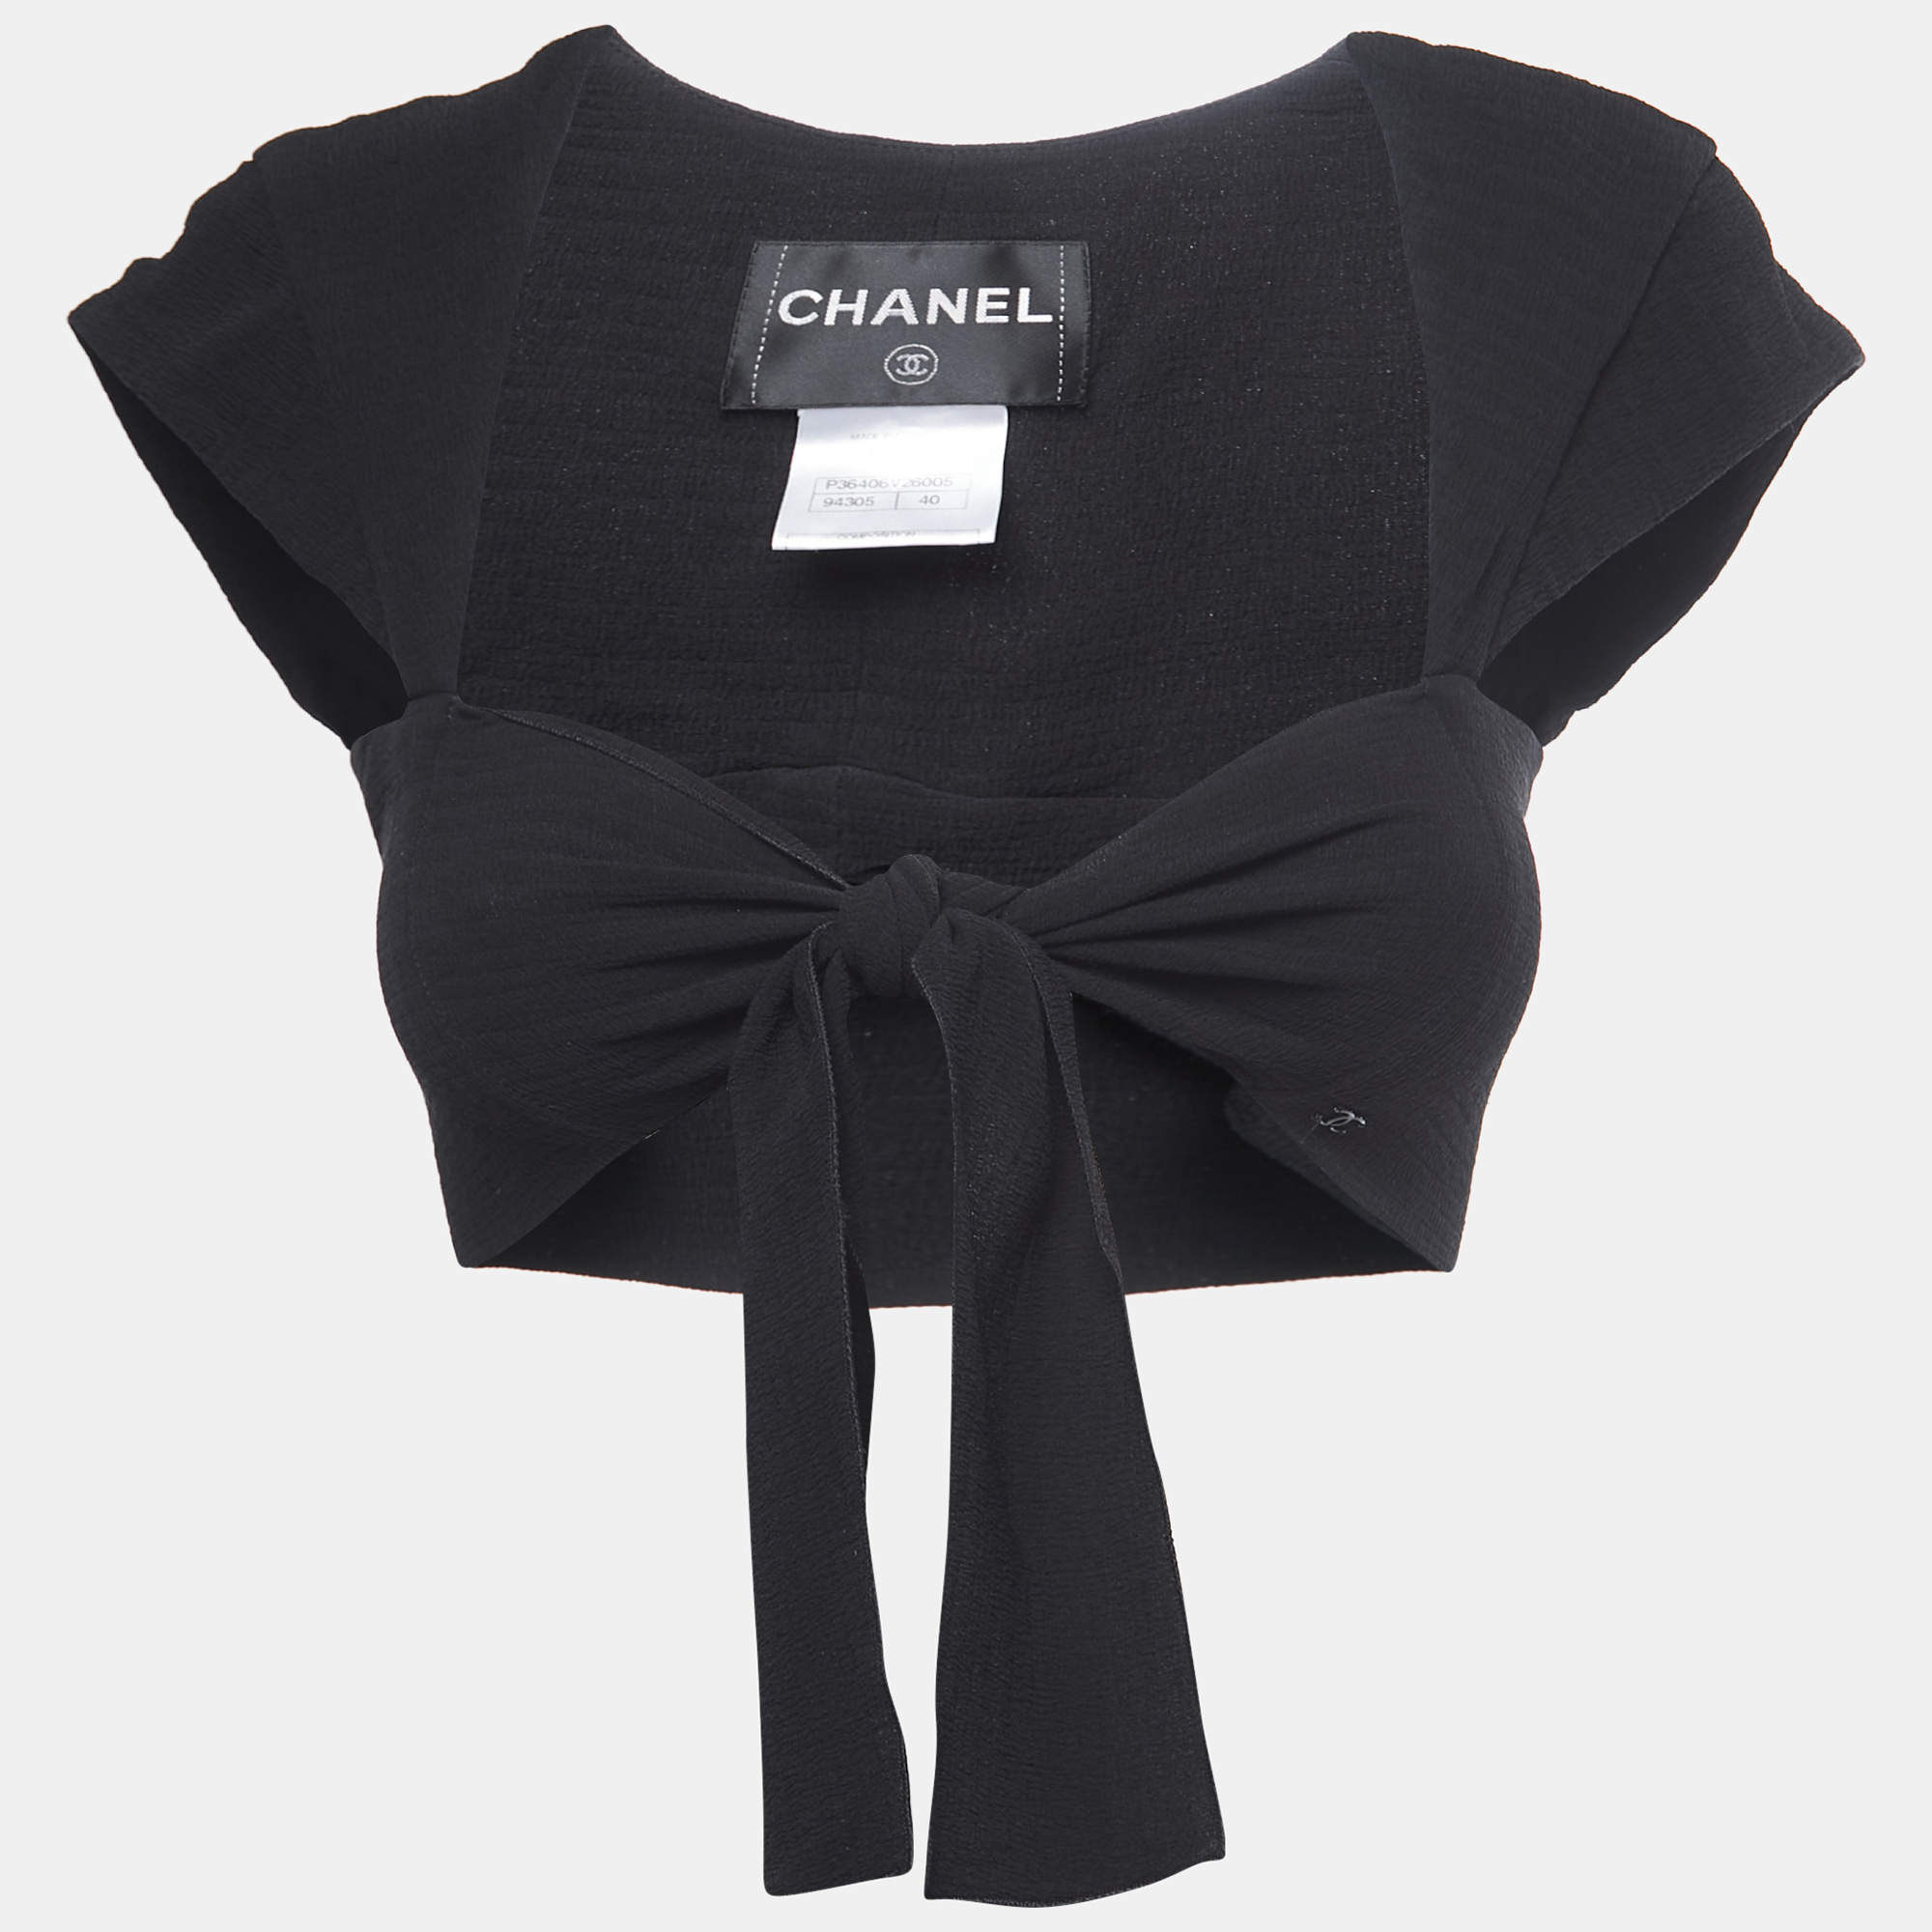 Chanel Black Crepe Front Tie Detail Crop Top M Chanel